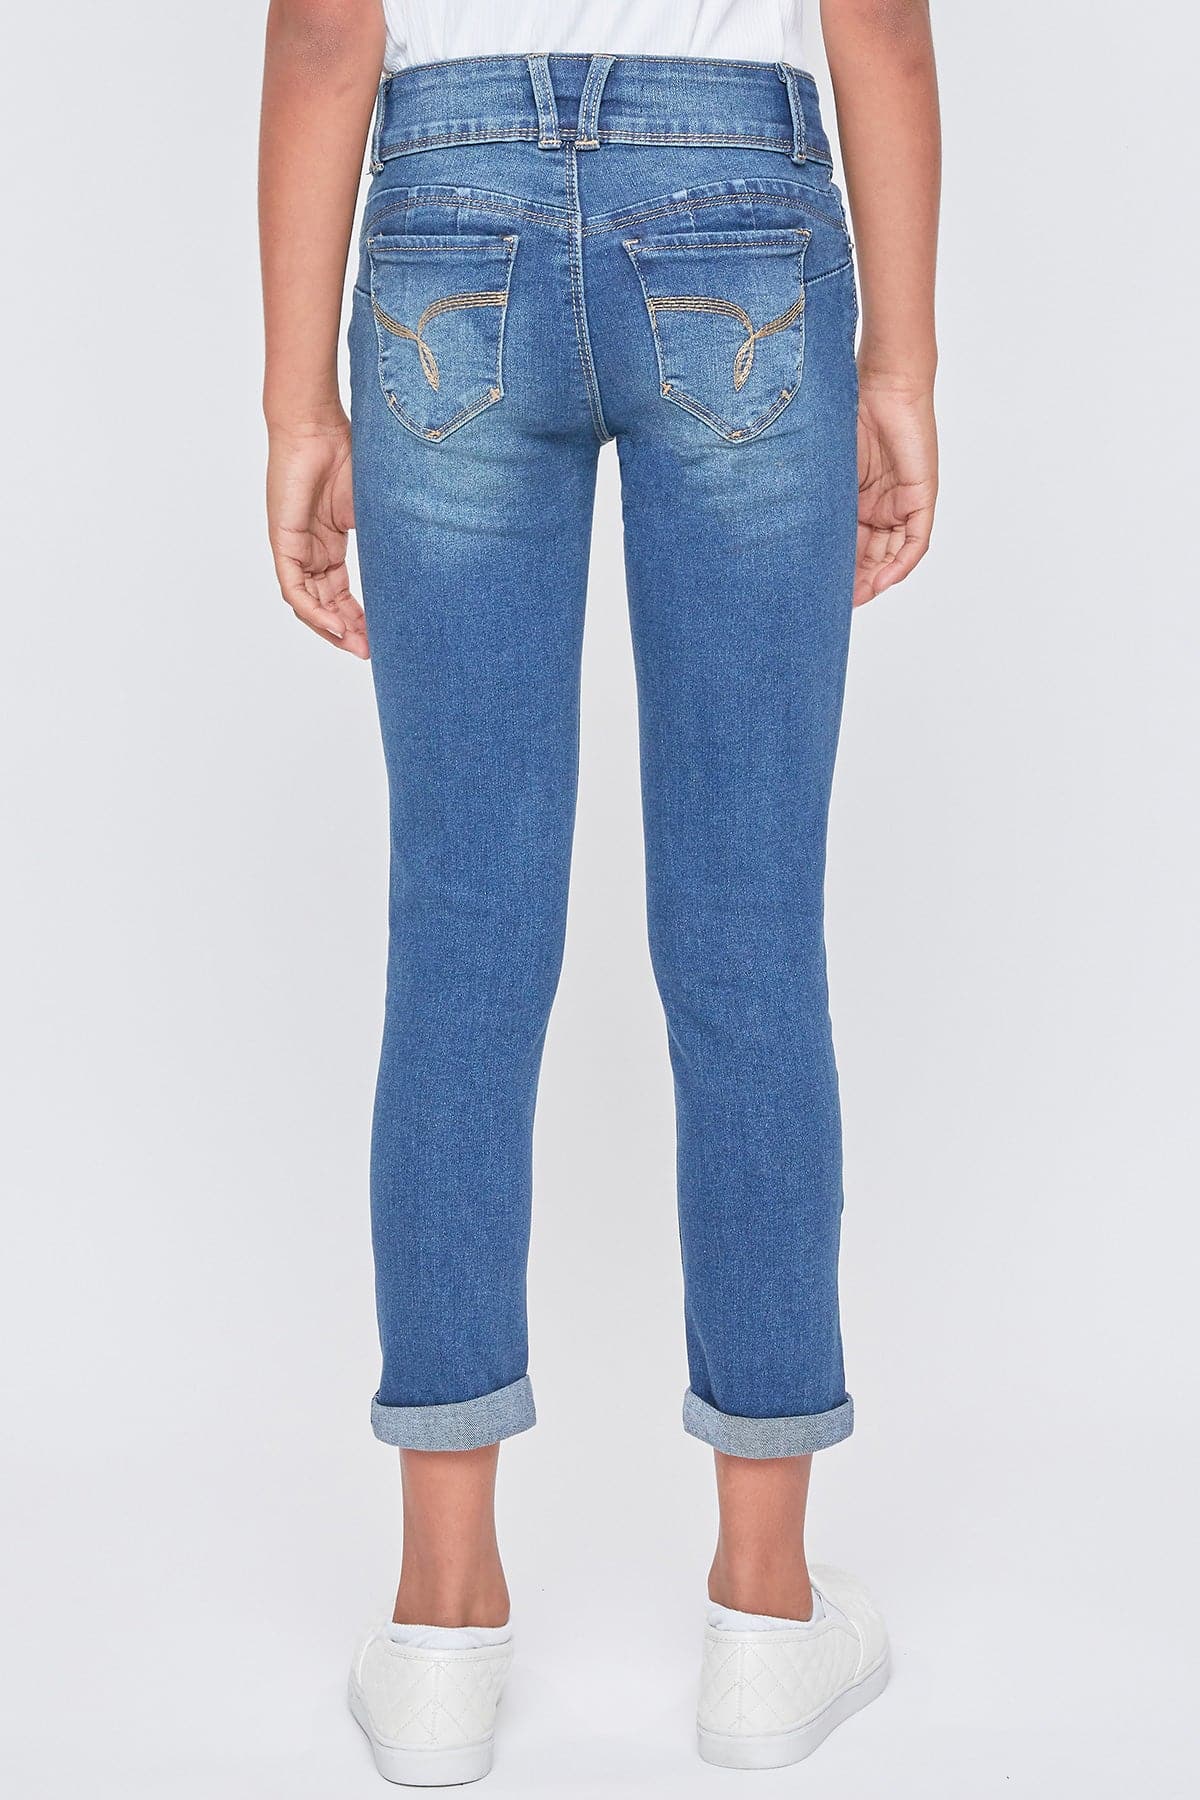 Girls Sustainable WannaBettaFit 2-Button Double Cuffed Skinny Jeans